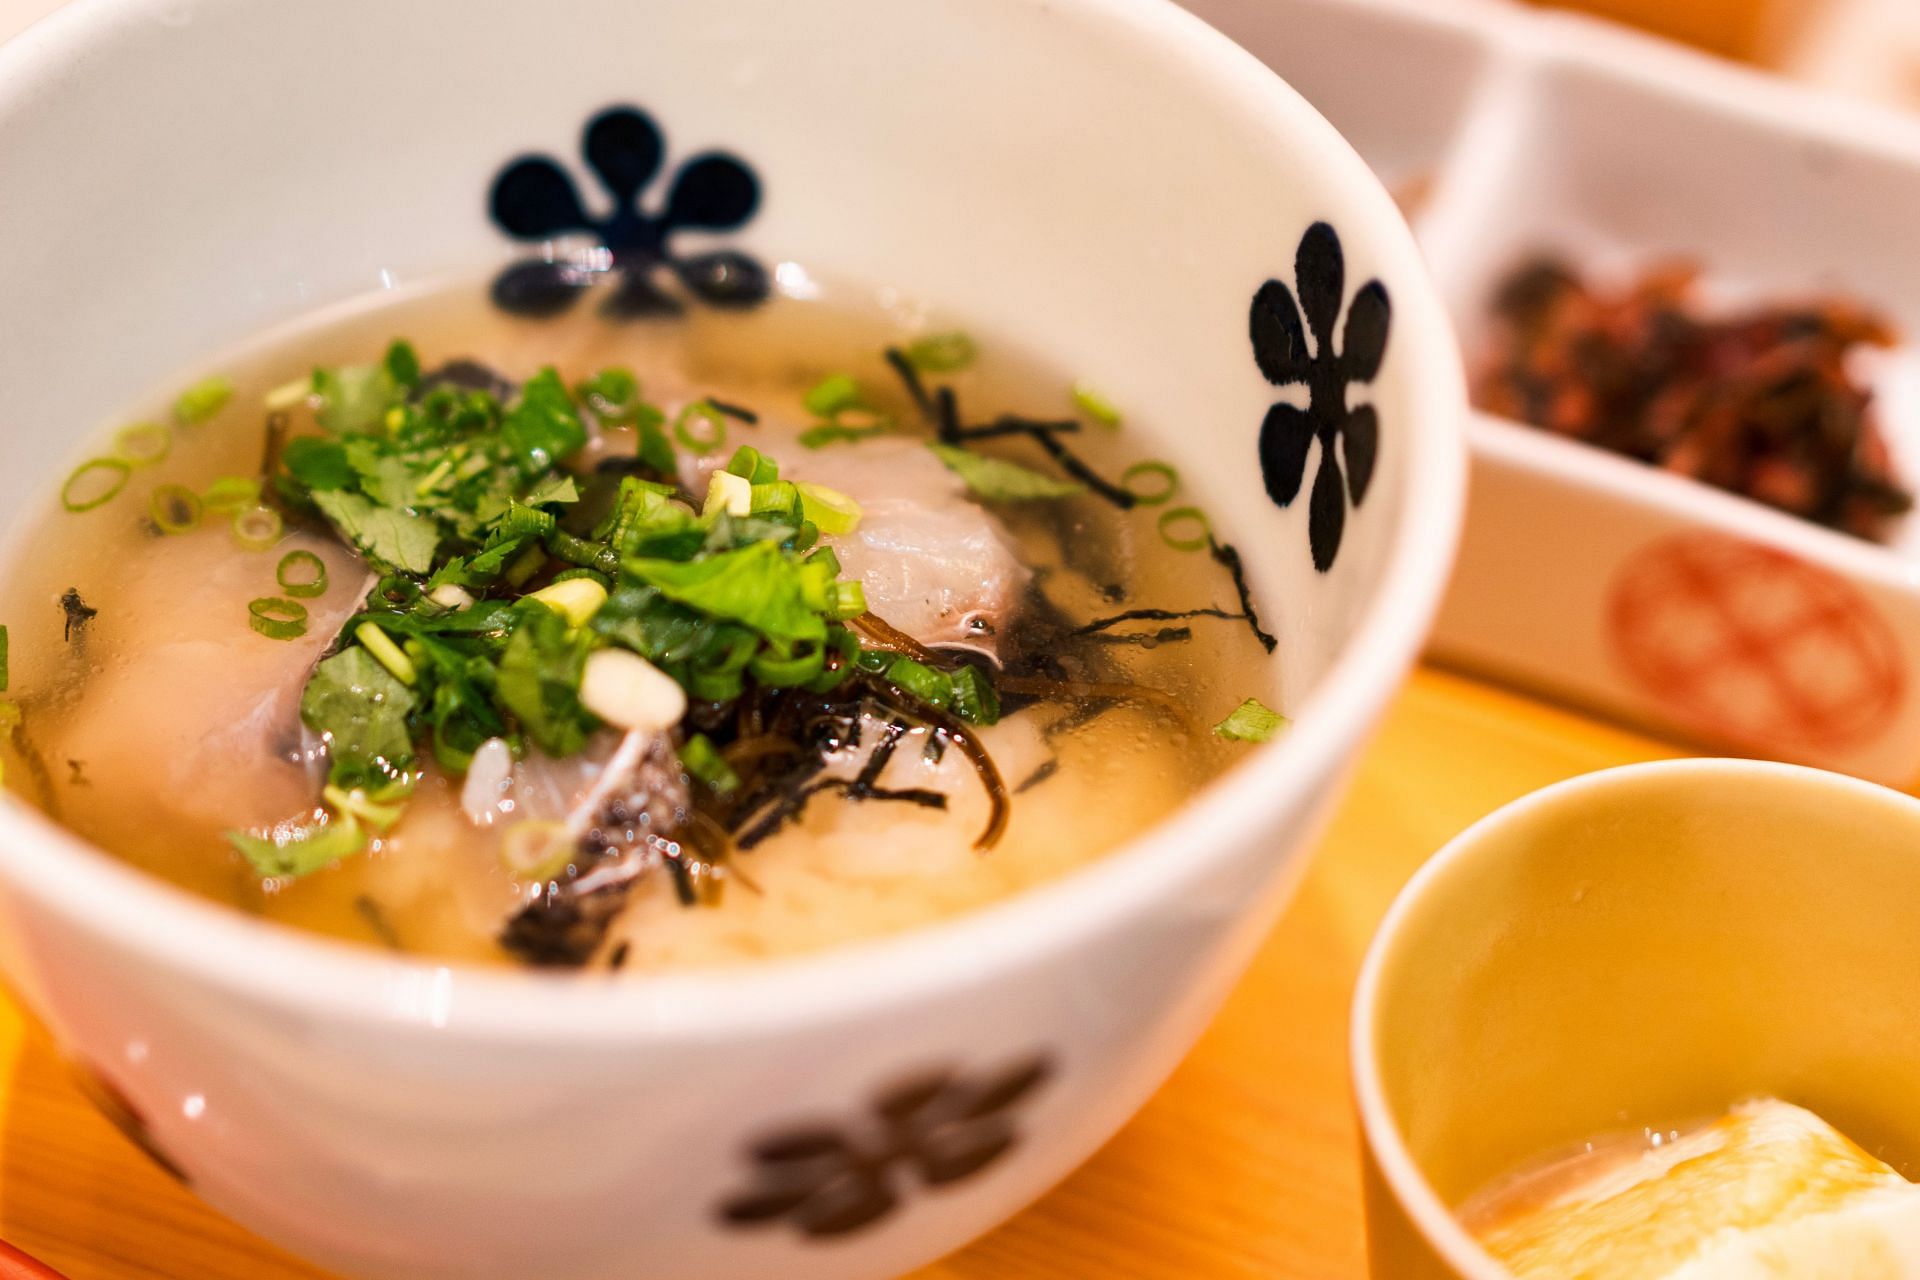 Miso soup is an important part of the Okinawa diet. (Image via Unsplash/White.Rainforest)